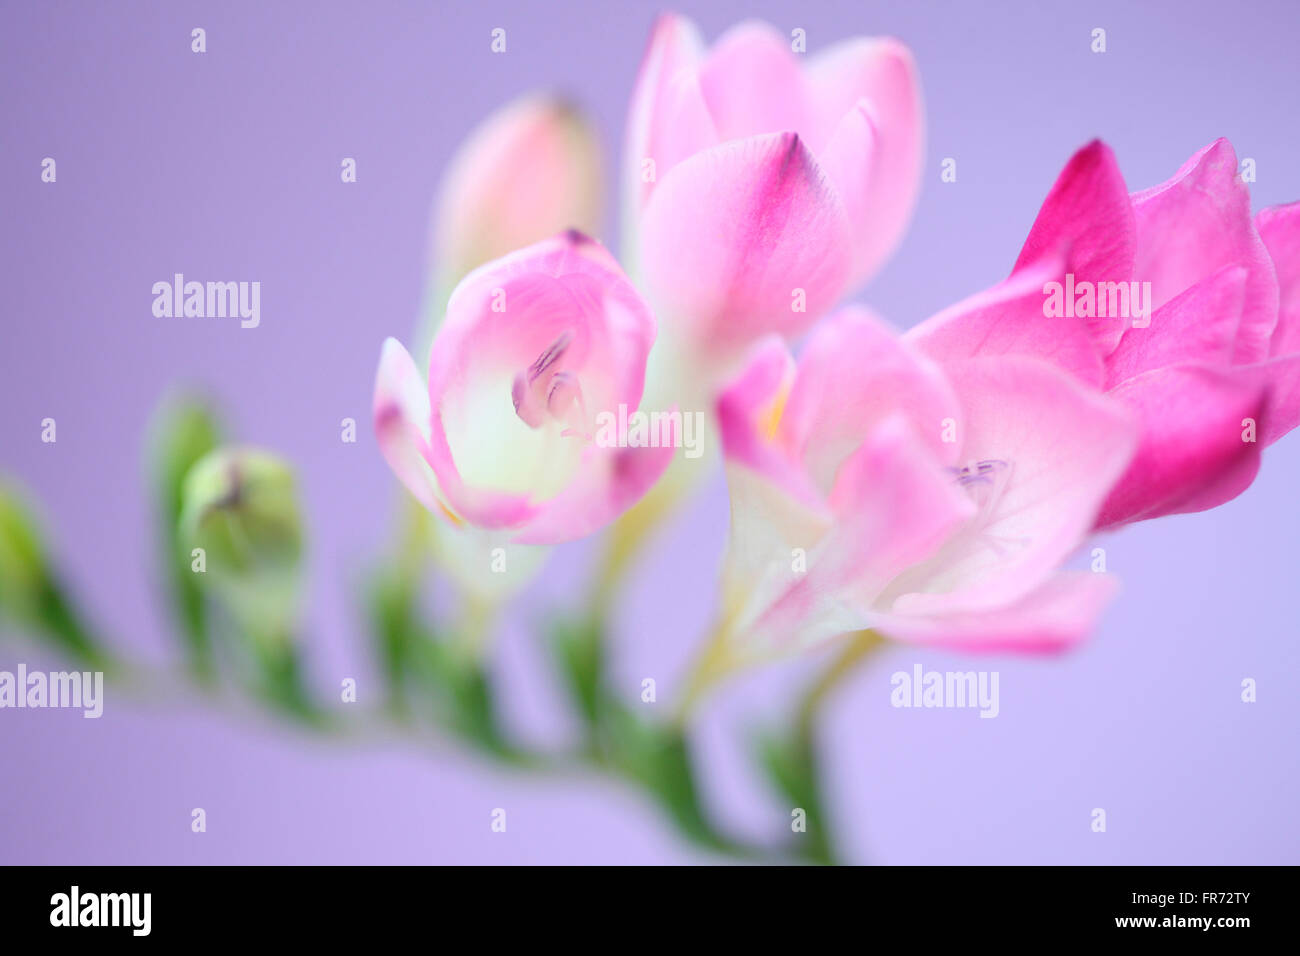 gentle pink freesia stem as sweet as its fragrance Jane Ann Butler Photography JABP1092 Stock Photo